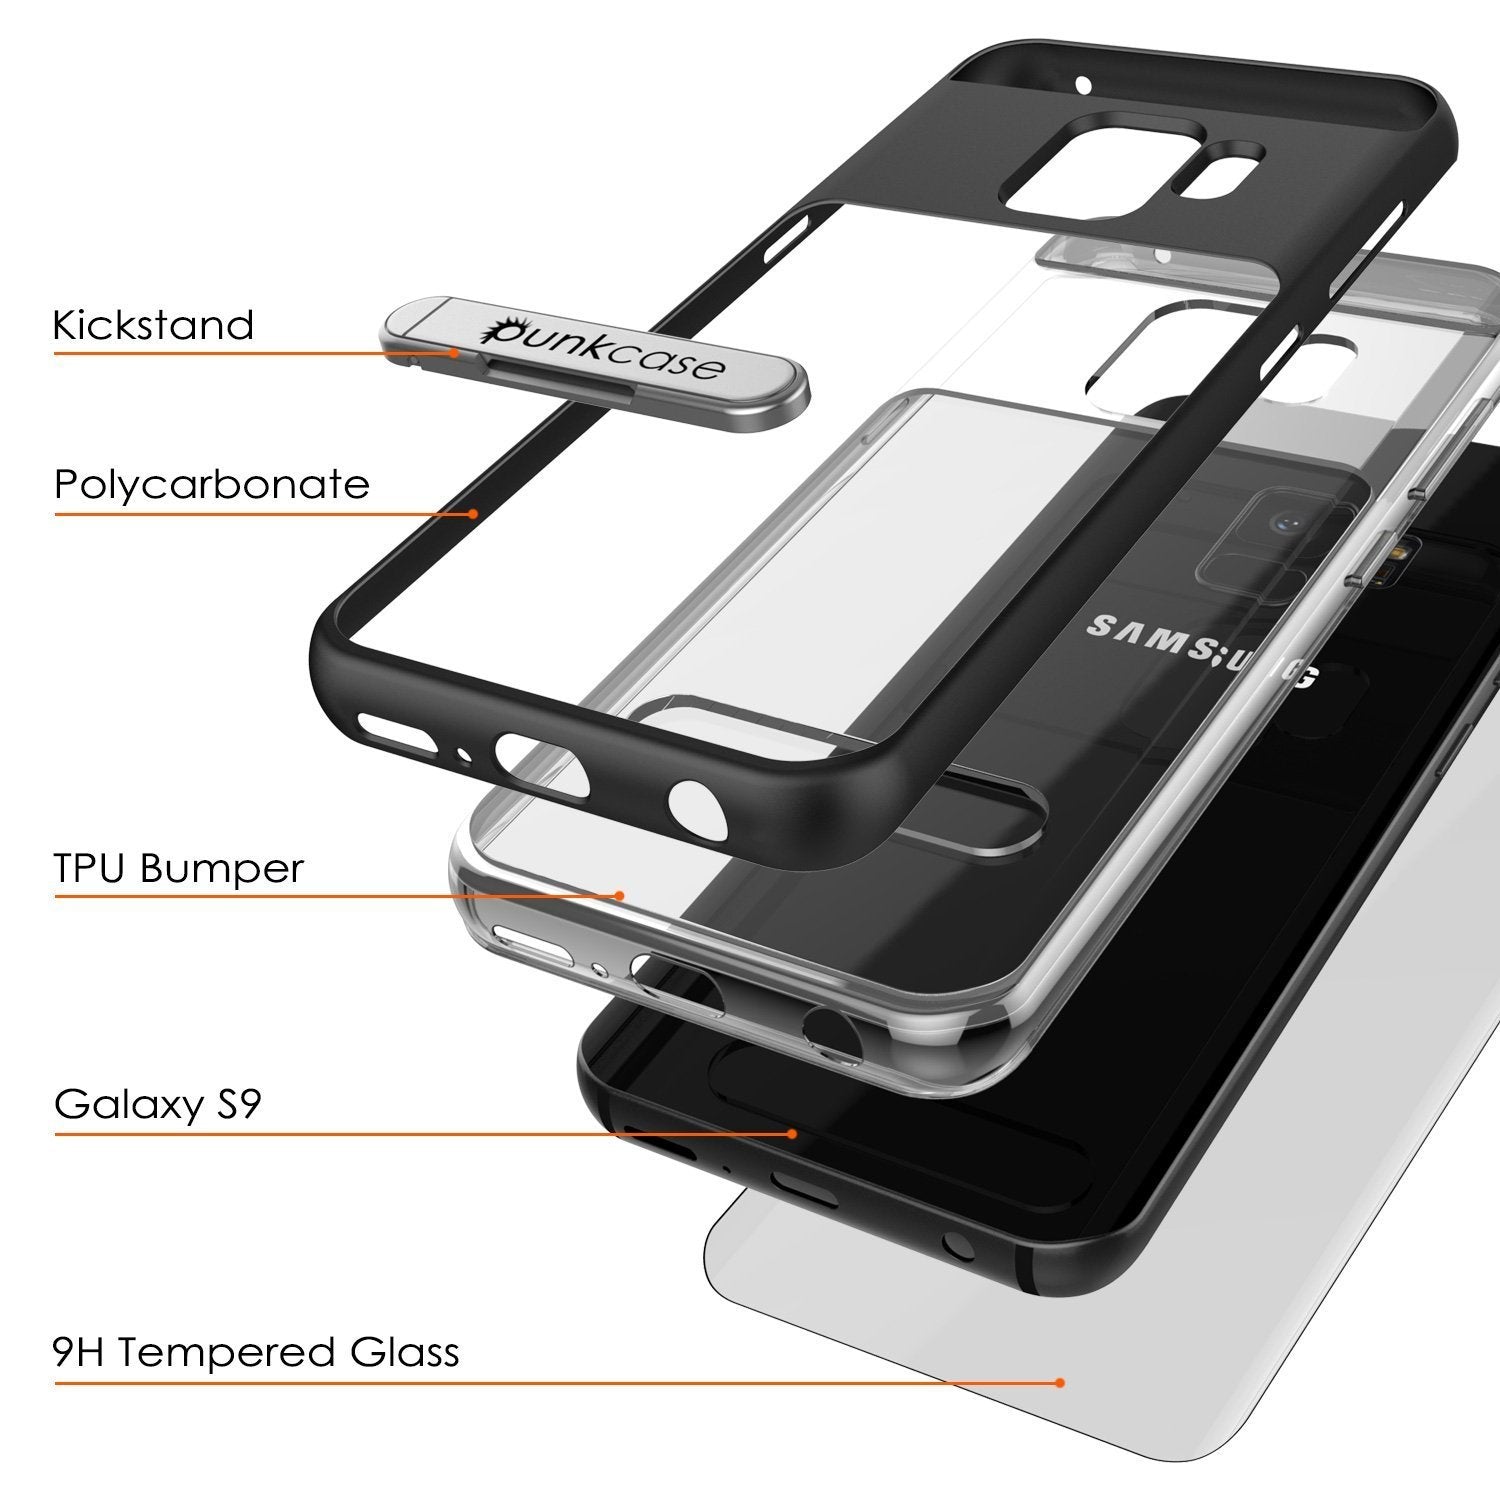 Galaxy S9 Punkcase, LUCID 3.0 Series Cover w/Kickstand, [Black]